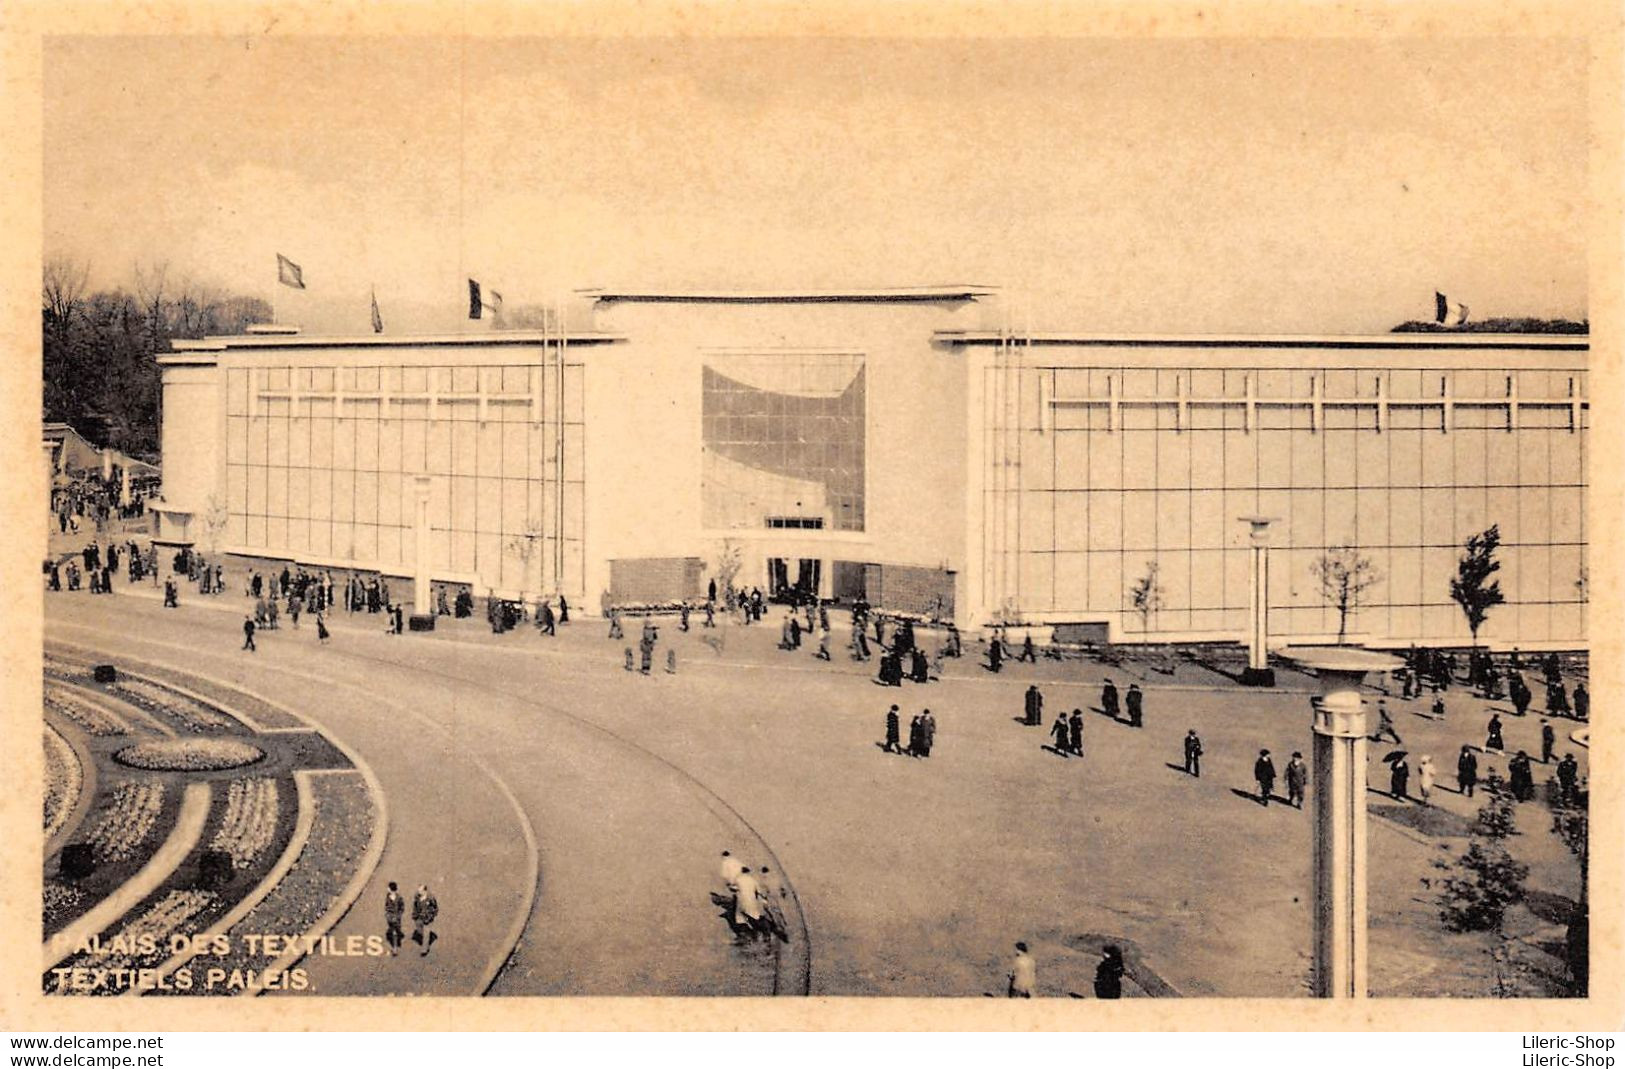 Exposition Universelle 1935 - PALAIS DES TEXTILES / TEXTIELS PALEIS - Weltausstellungen